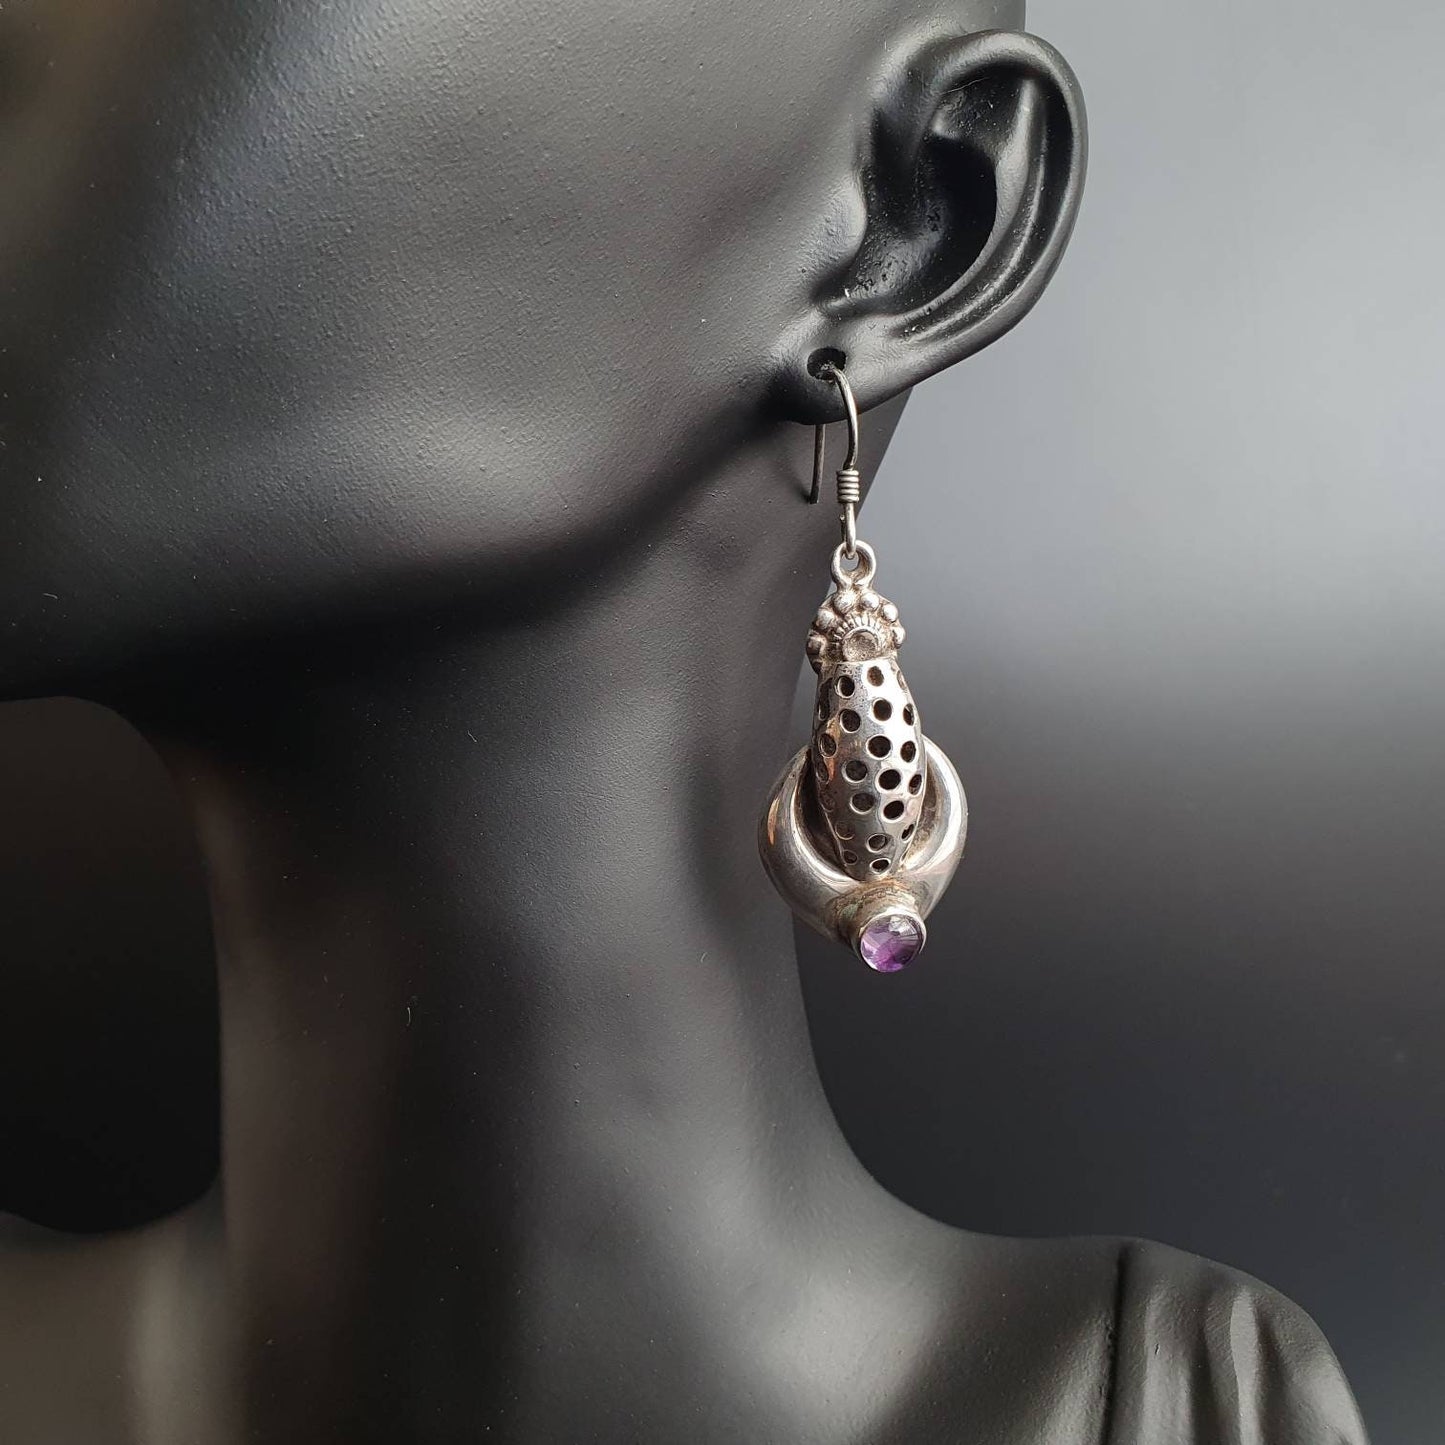 Vintage earrings, Amethyst earrings, silver earrings, statement earrings, Victorian earrings,